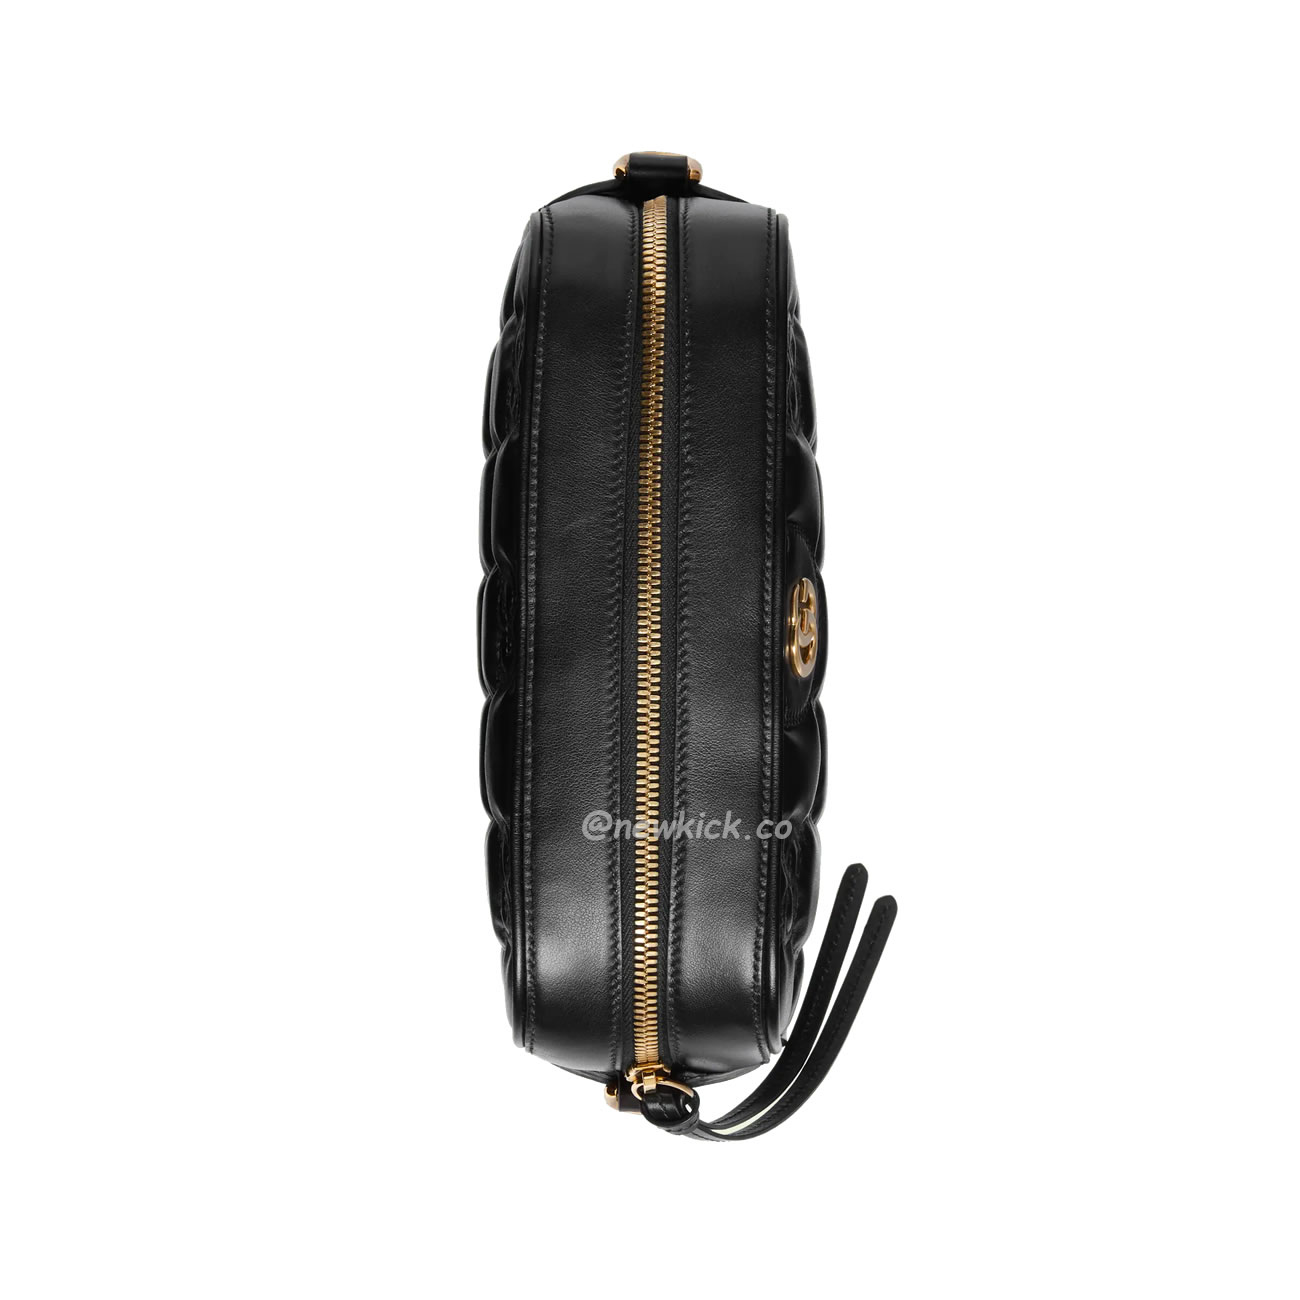 Gucci Gg Matelass Small Bag Product Details 702234 Um8hg 1046 (3) - newkick.org